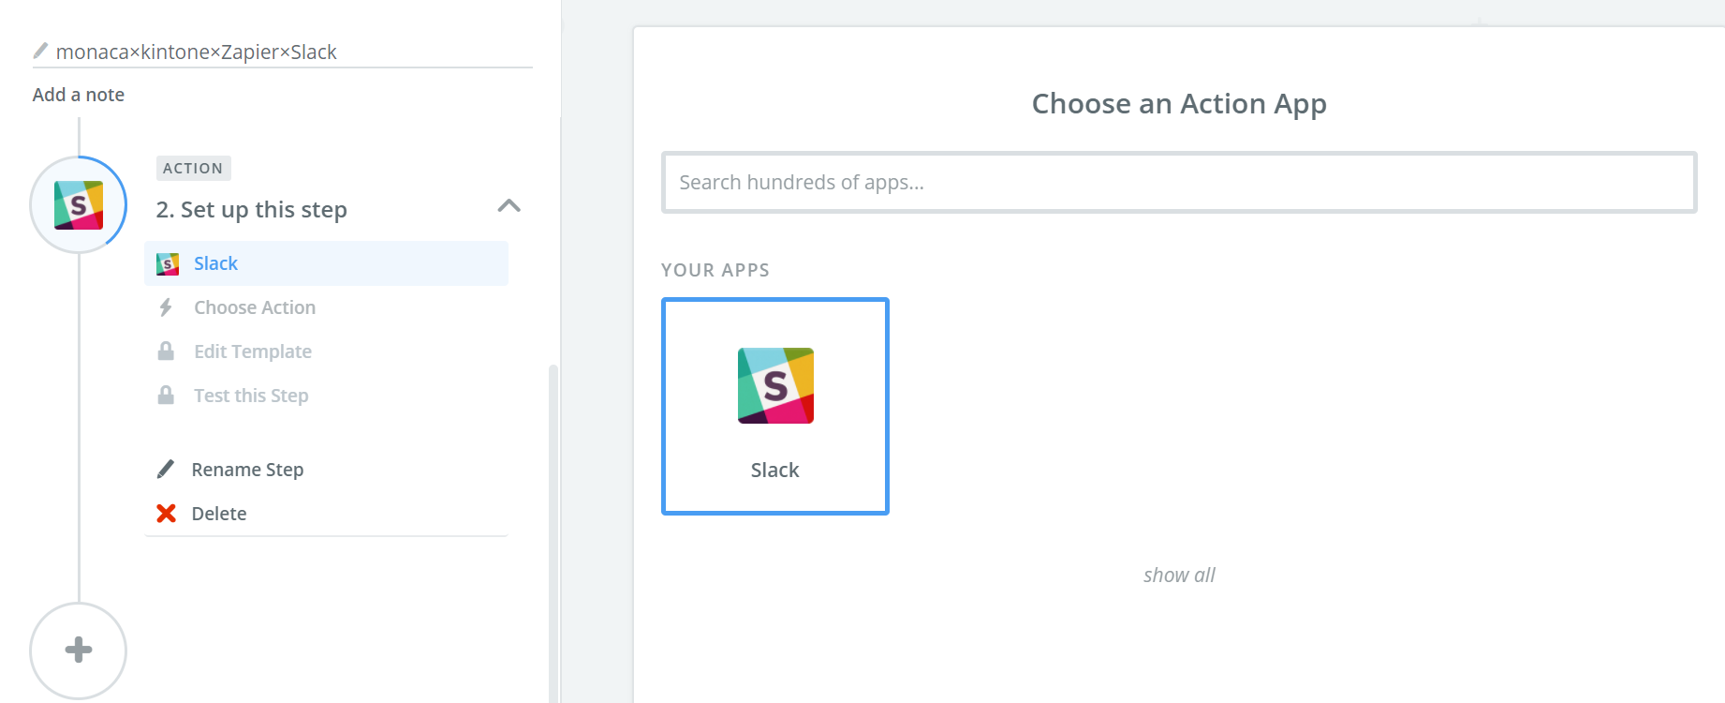 「Choose App」で「Slack」を選択する画面